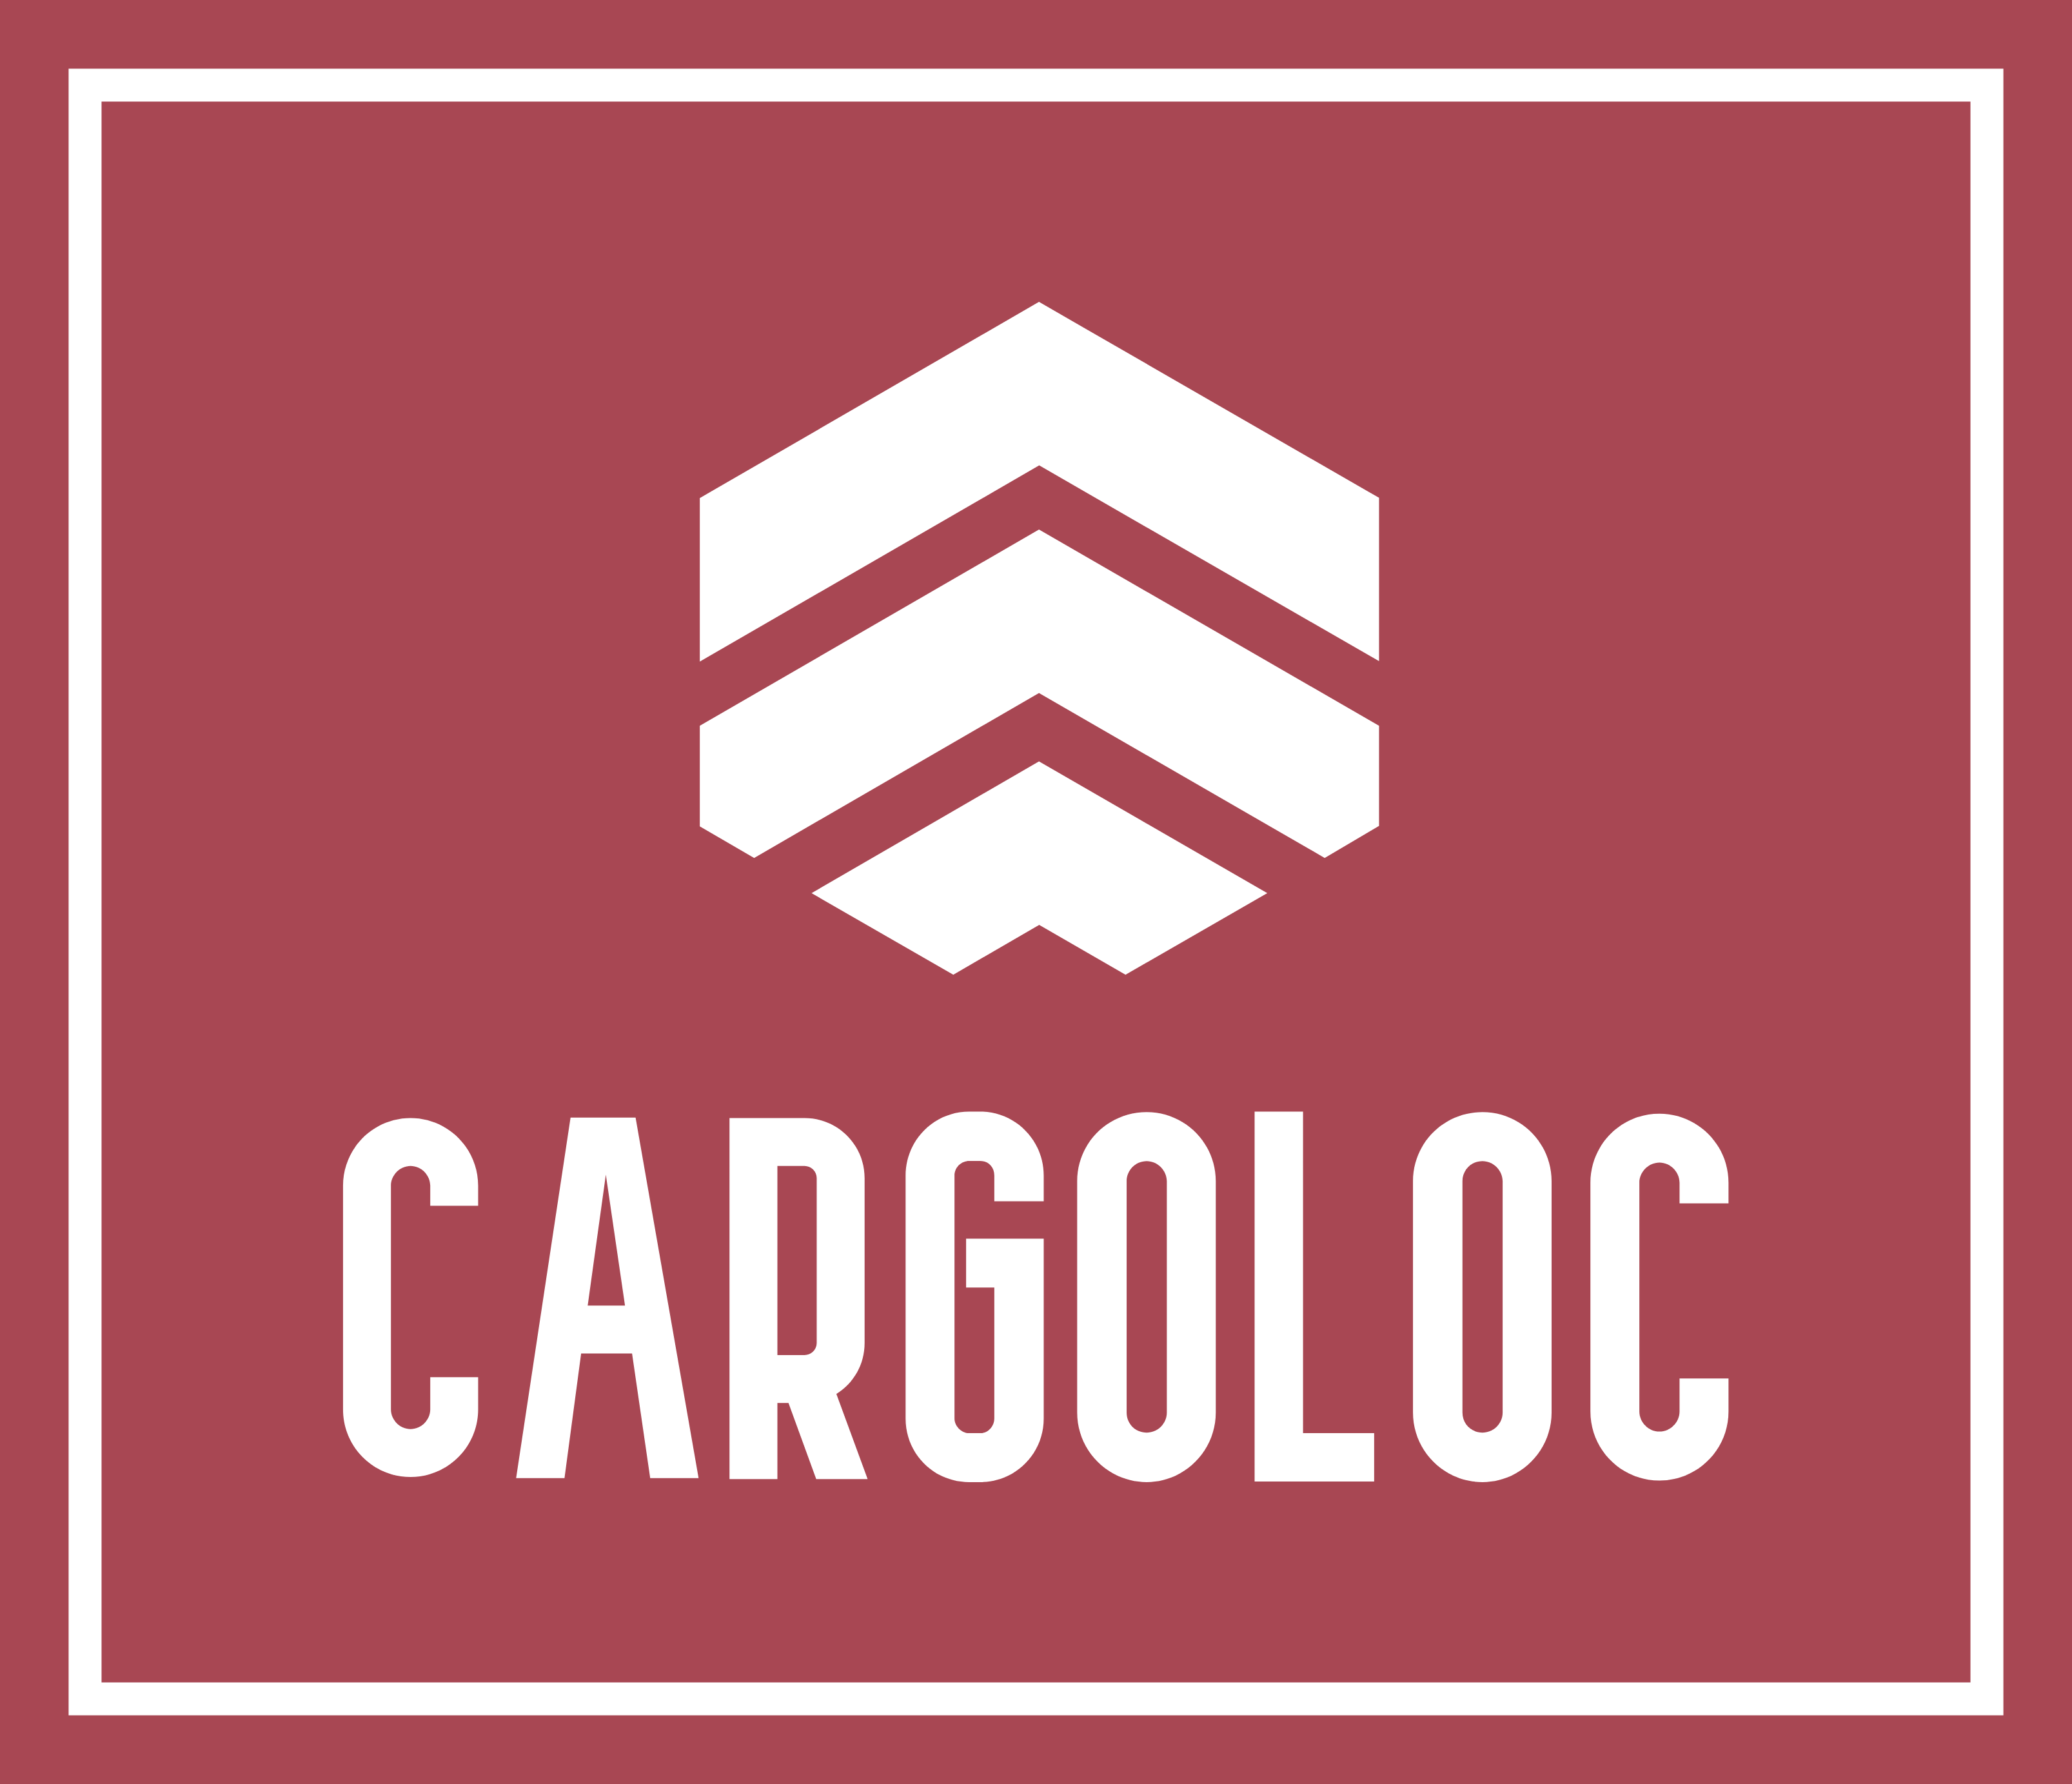 Cargoloc - Color logo